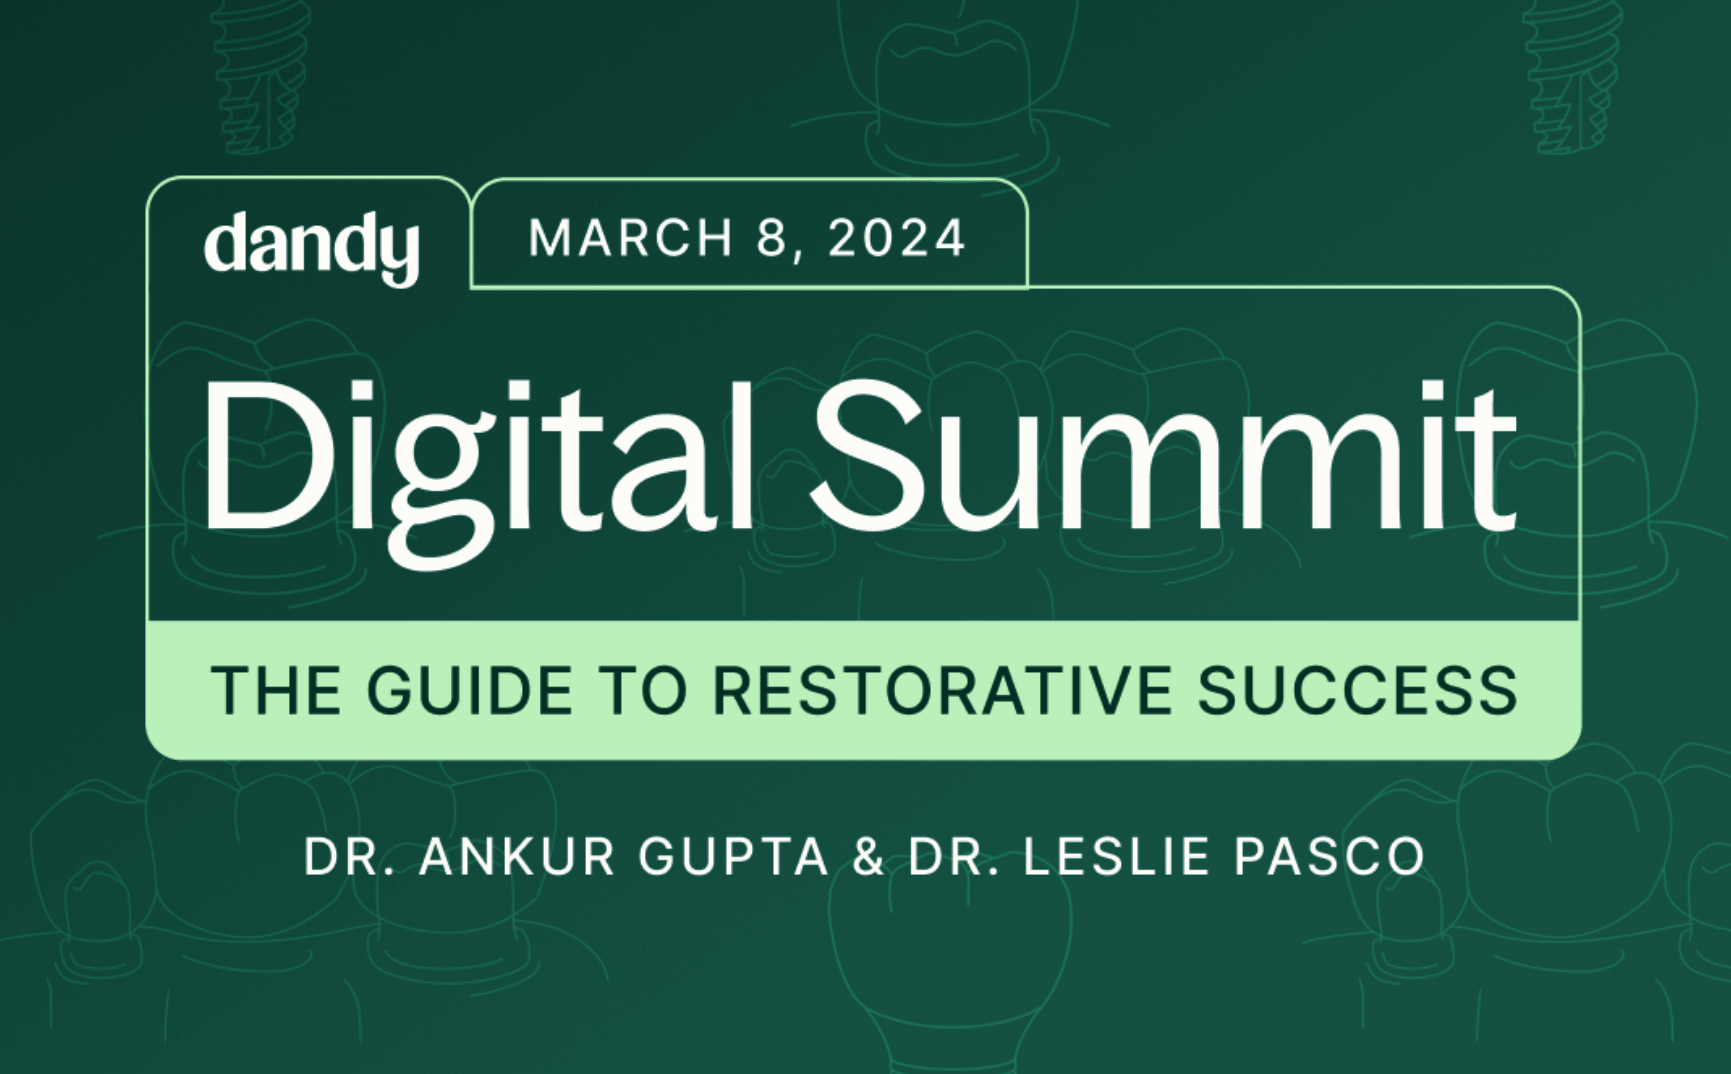 Dandy digital summit spring 24 restorative